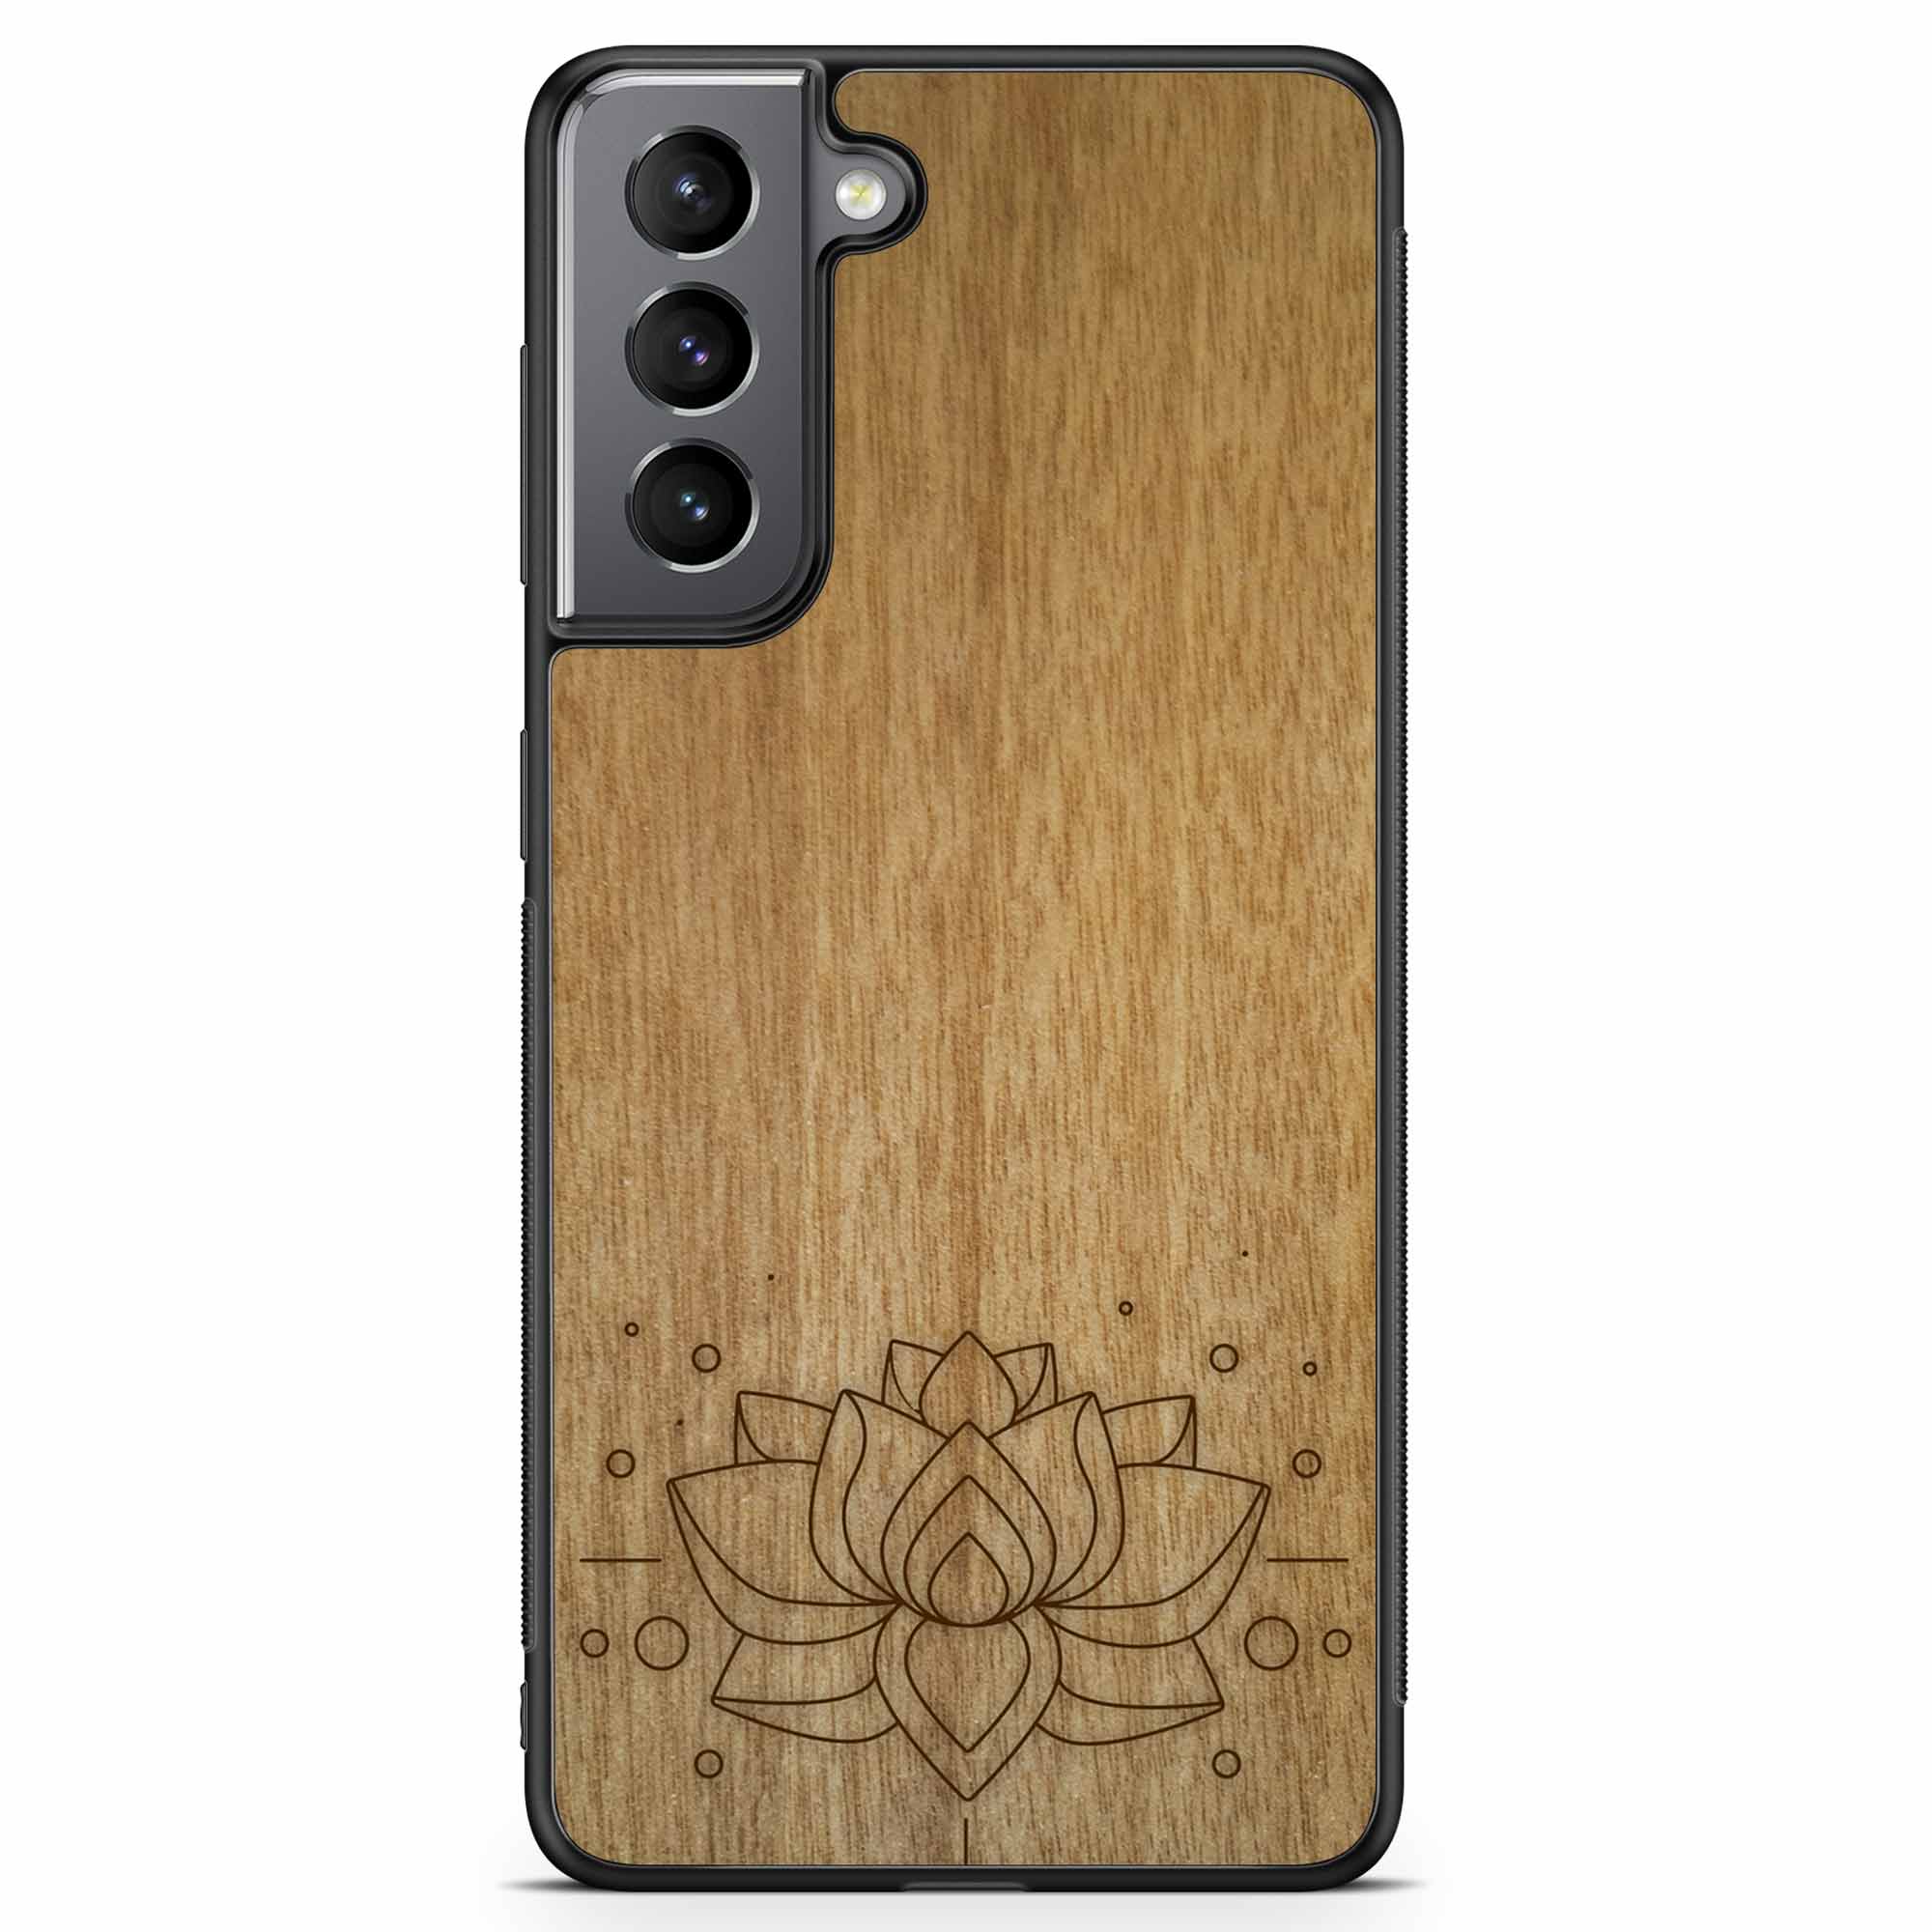 Gravierte Lotus Samsung S21 Holz-Handyhülle